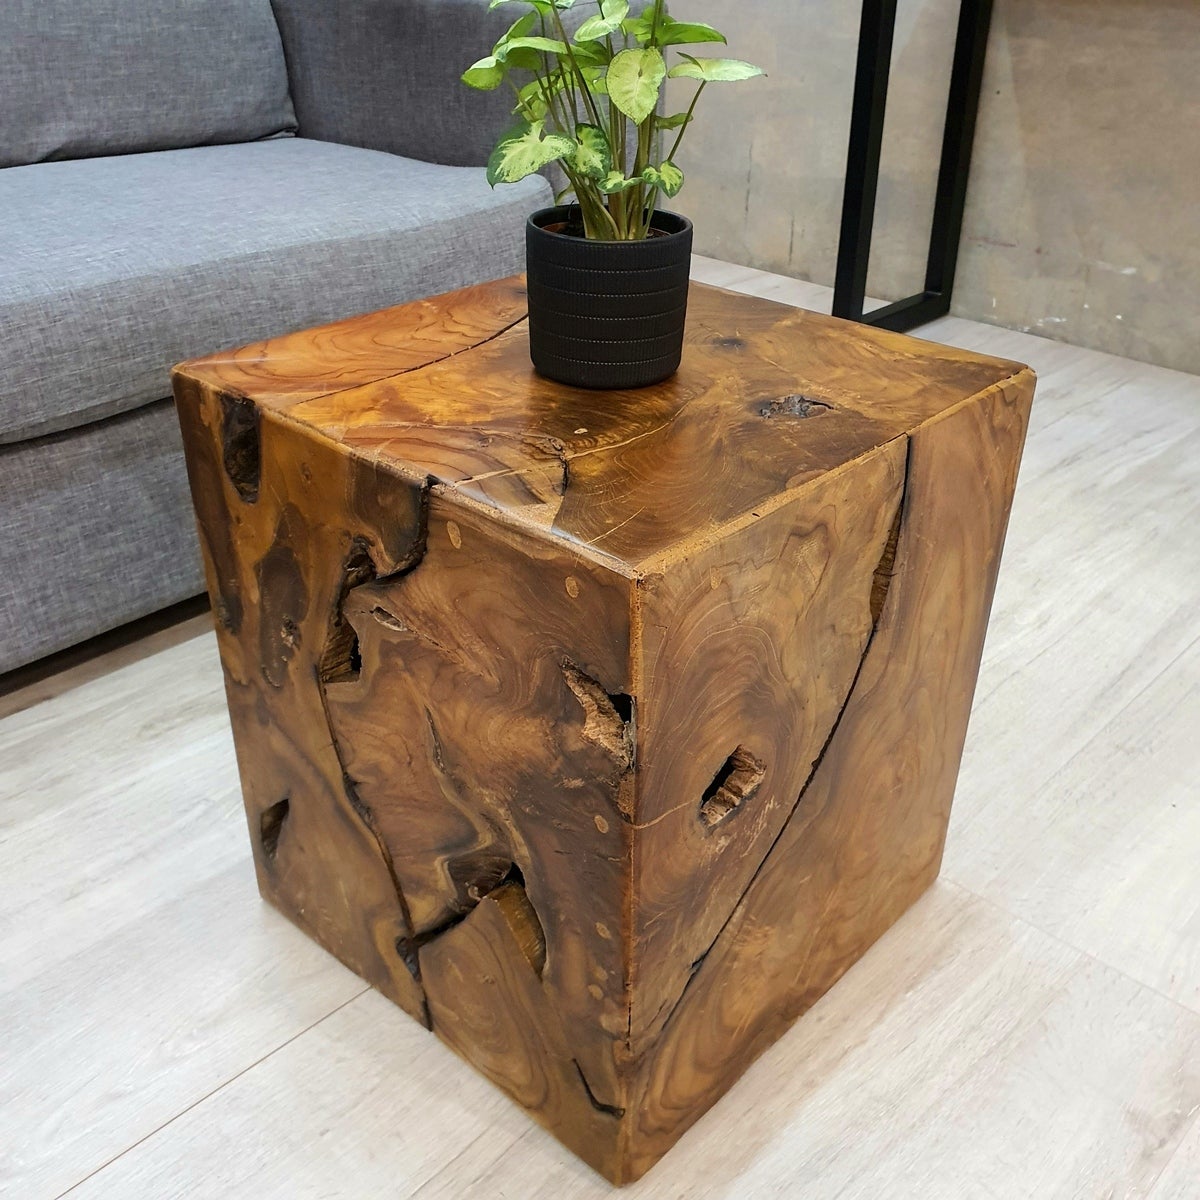 MANGO TREES "Harris" Inlayed Solid Teak Wood Stool/Side Table/Plant Stand 40cm